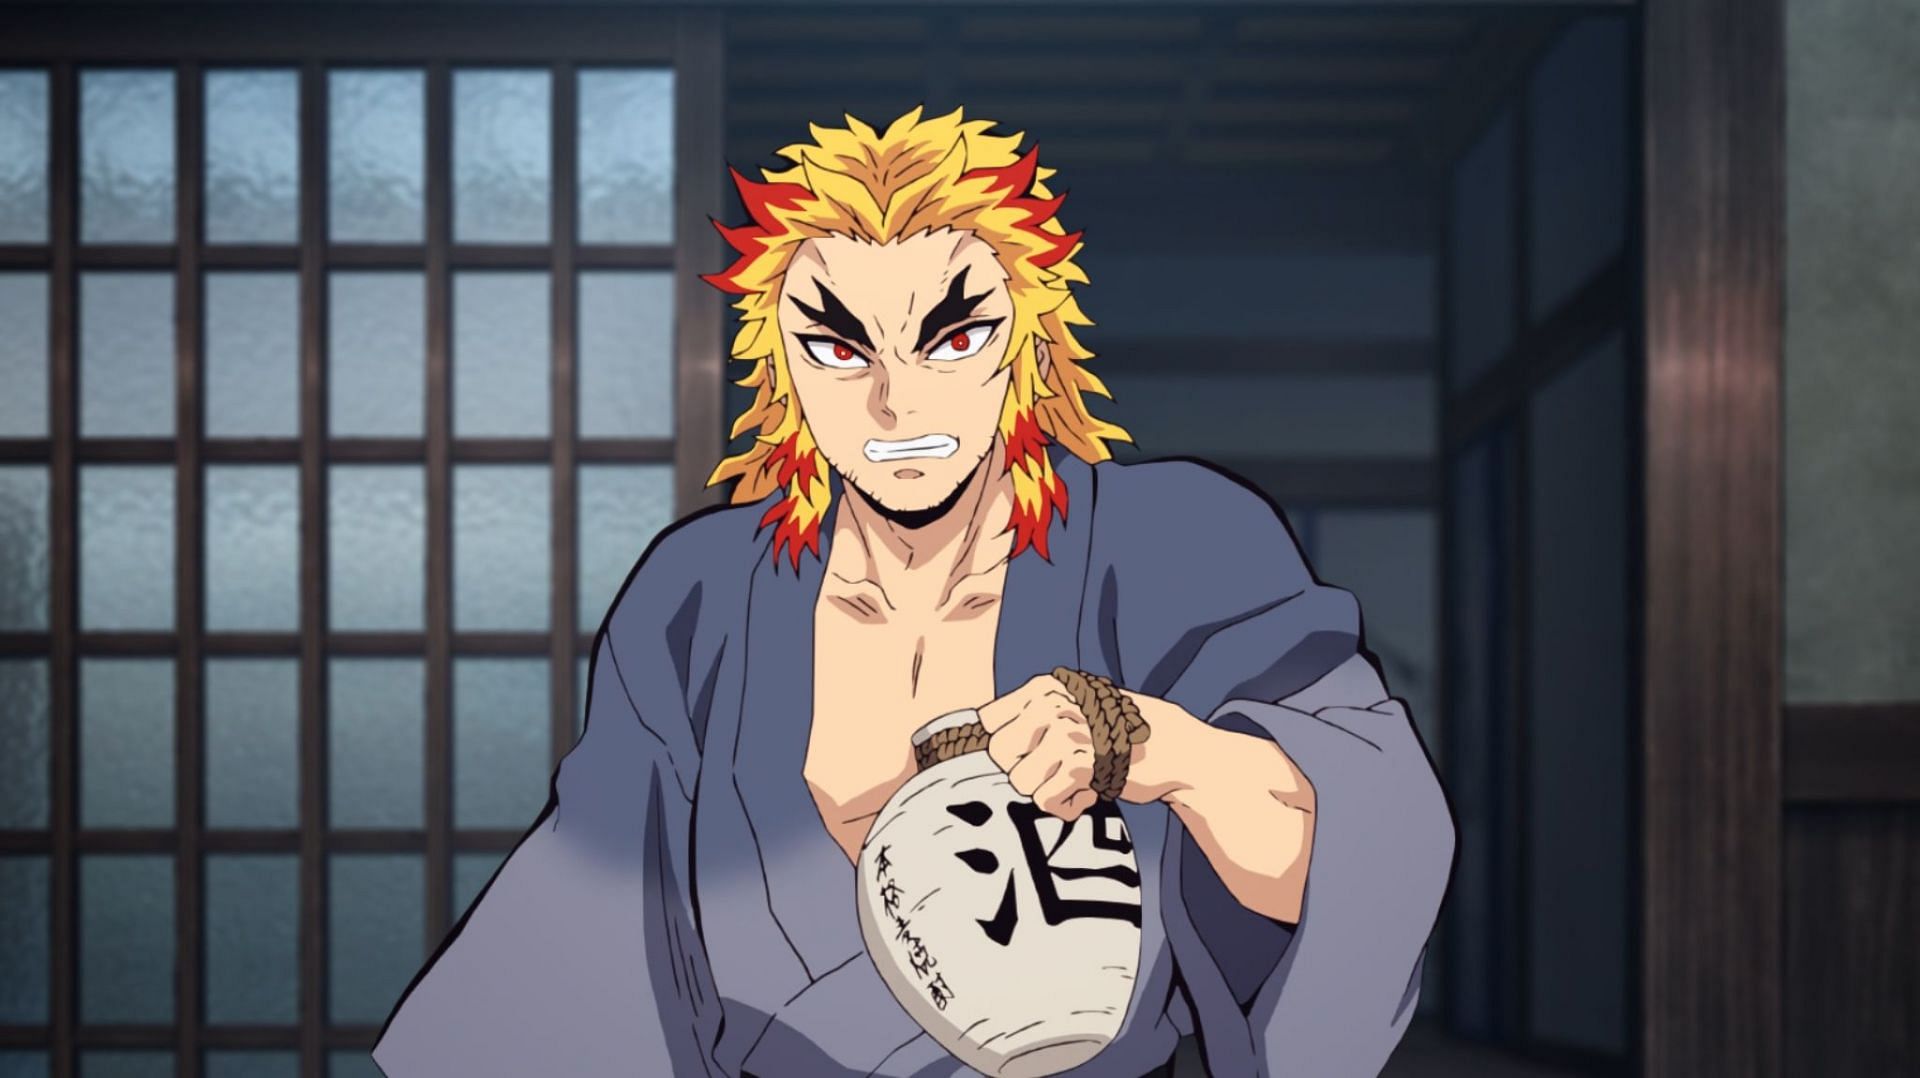 Shinjuro Rengoku as seen in the anime series (Image via Ufotable)